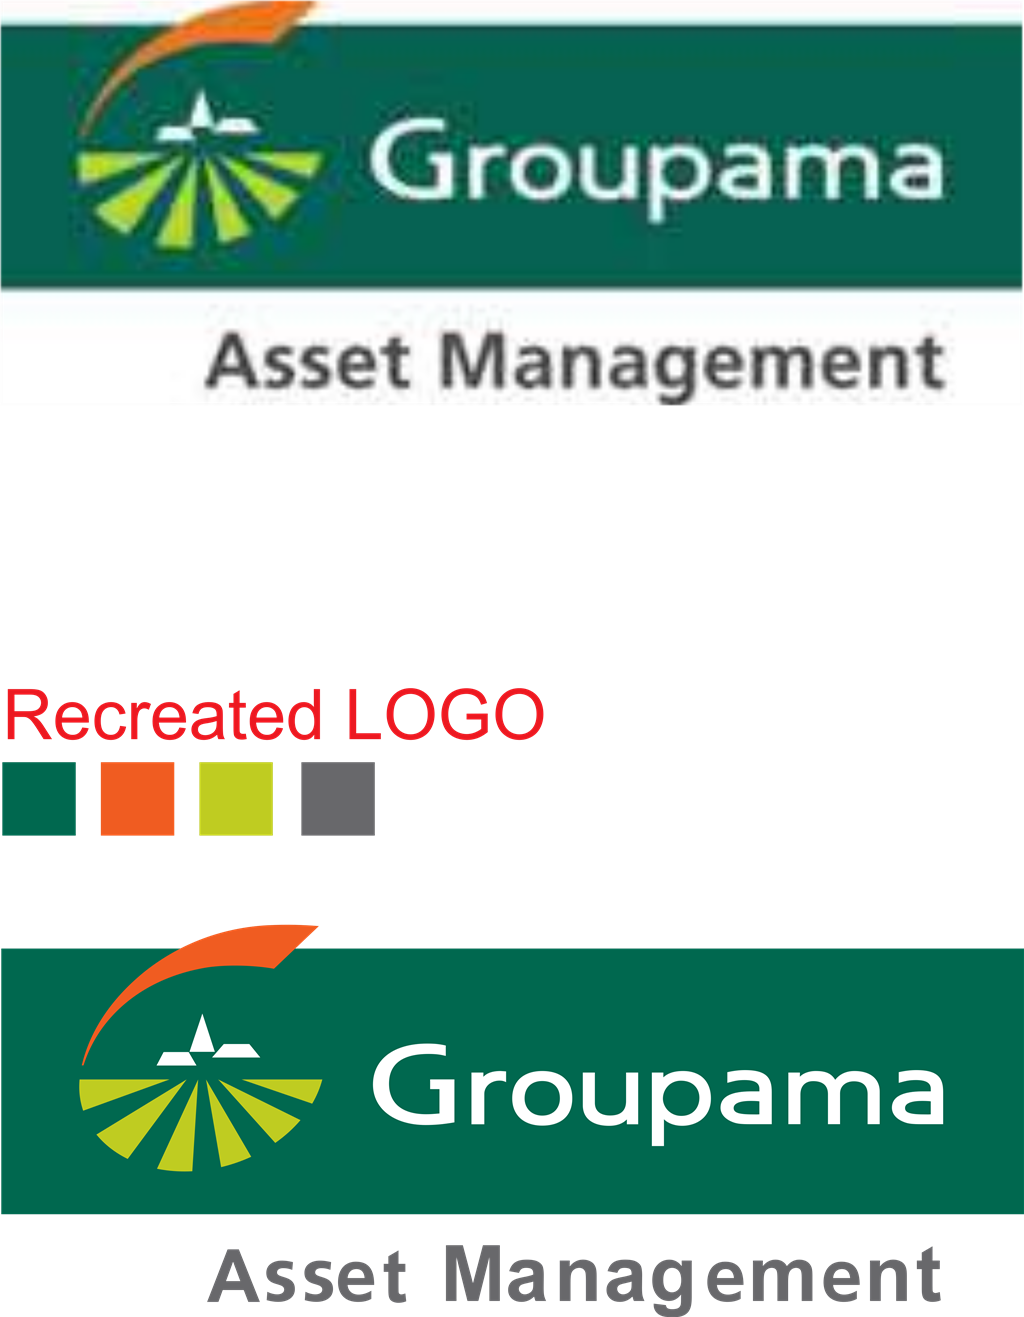 Groupama logotype, transparent .png, medium, large